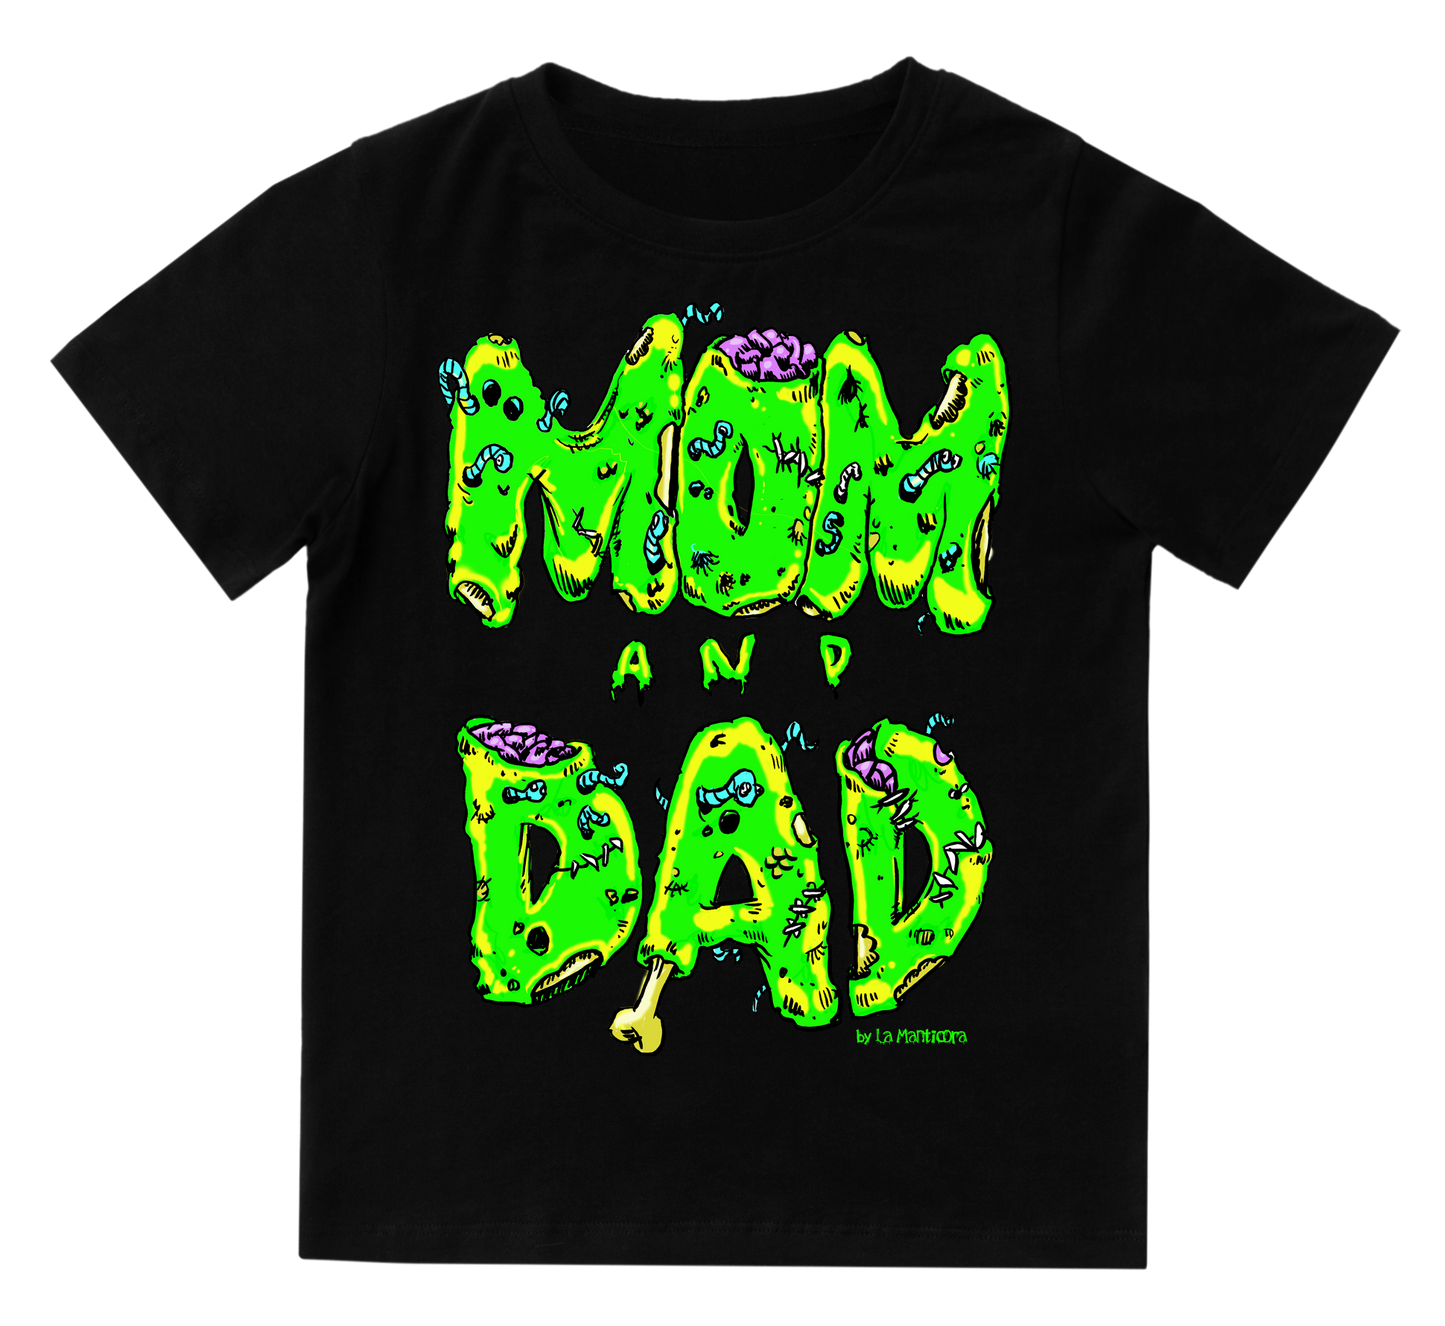 Camiseta bebé Mom & Dad